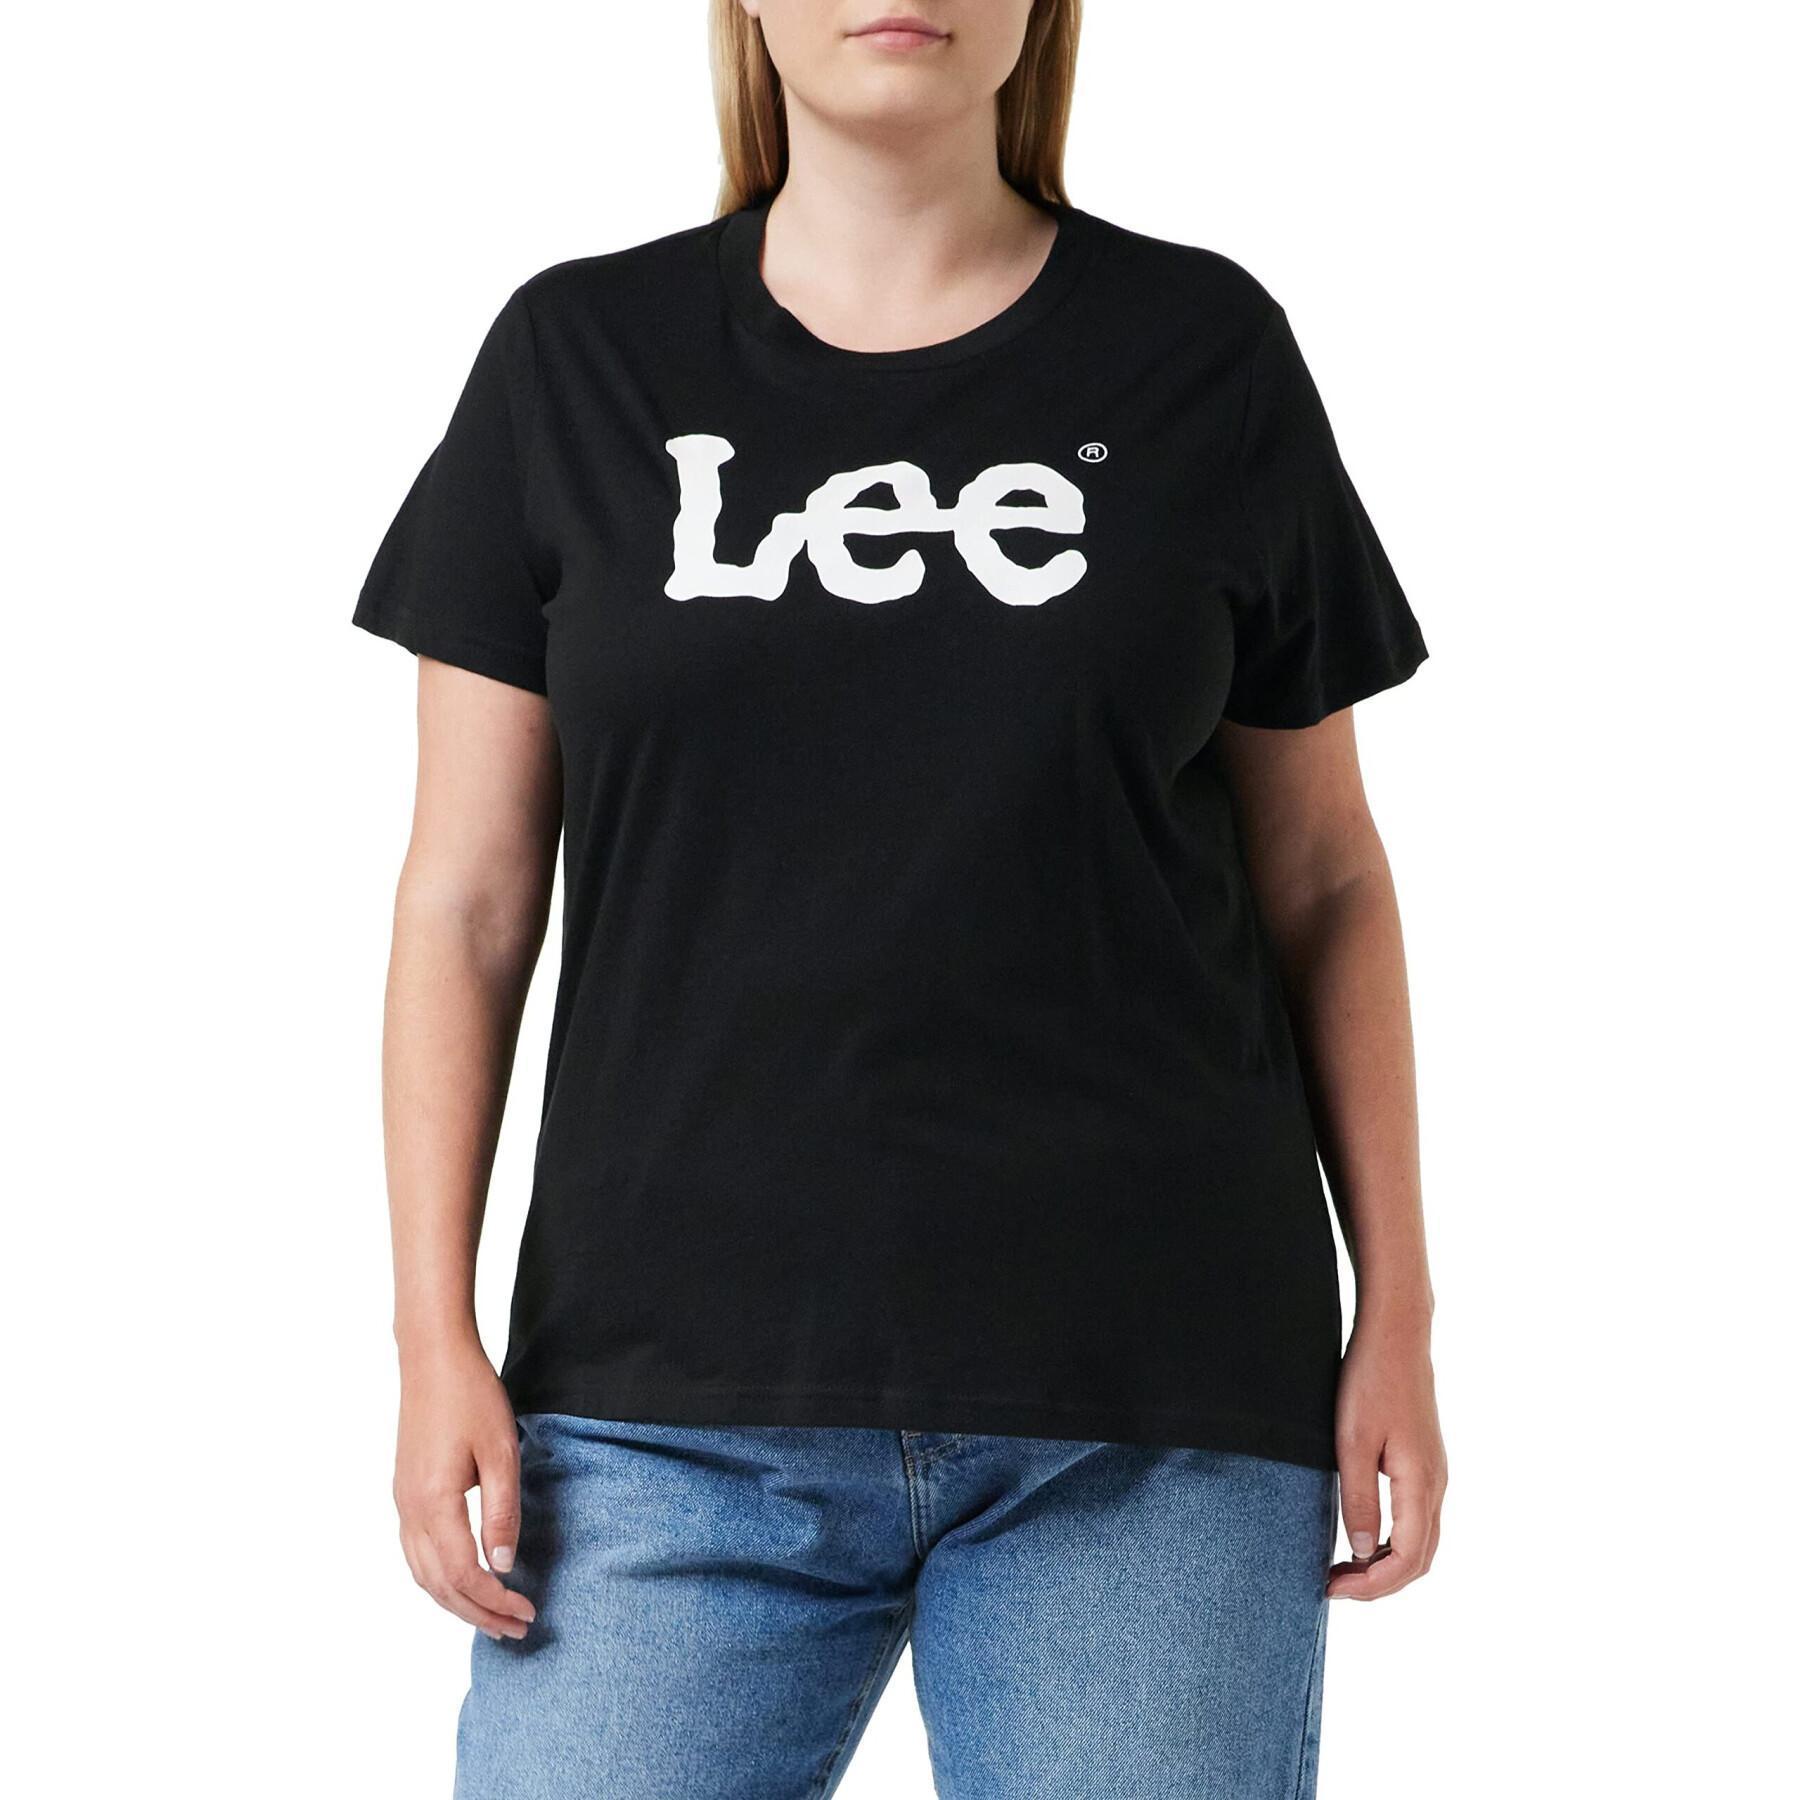 Camiseta feminina Lee Logo